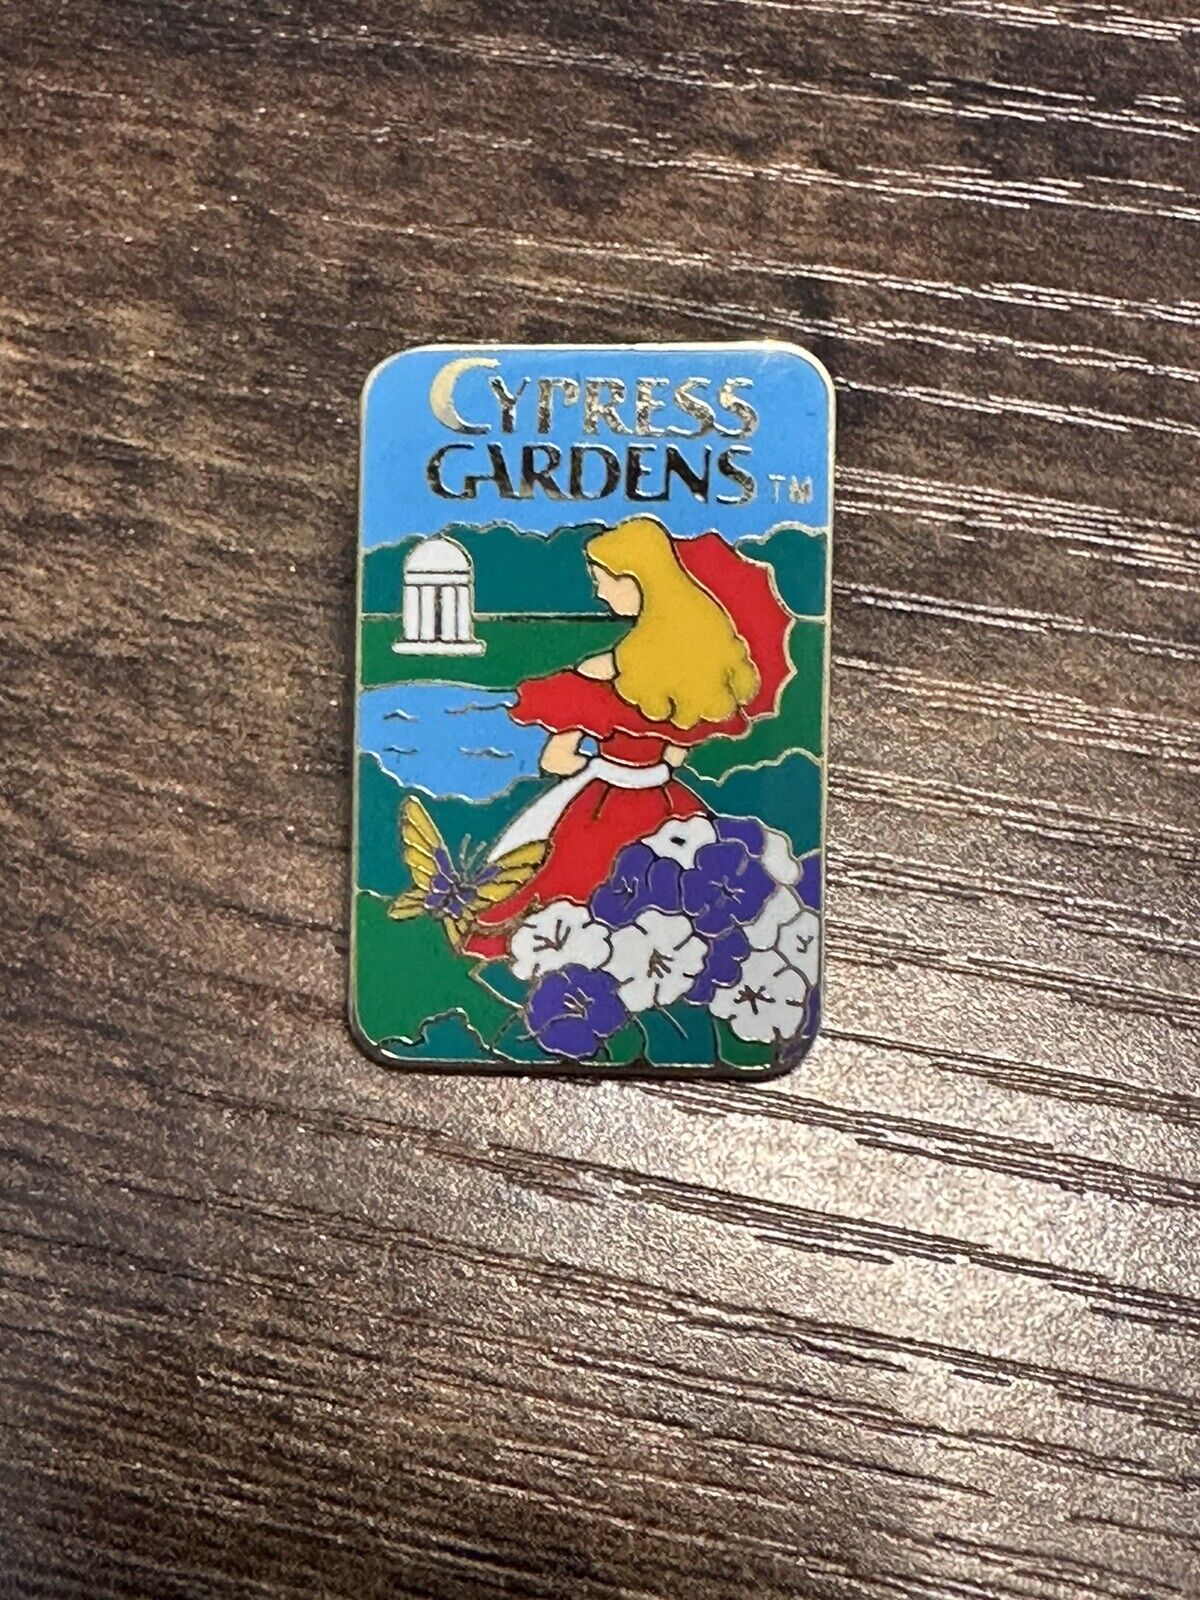 Cypress Gardens Trading Pin